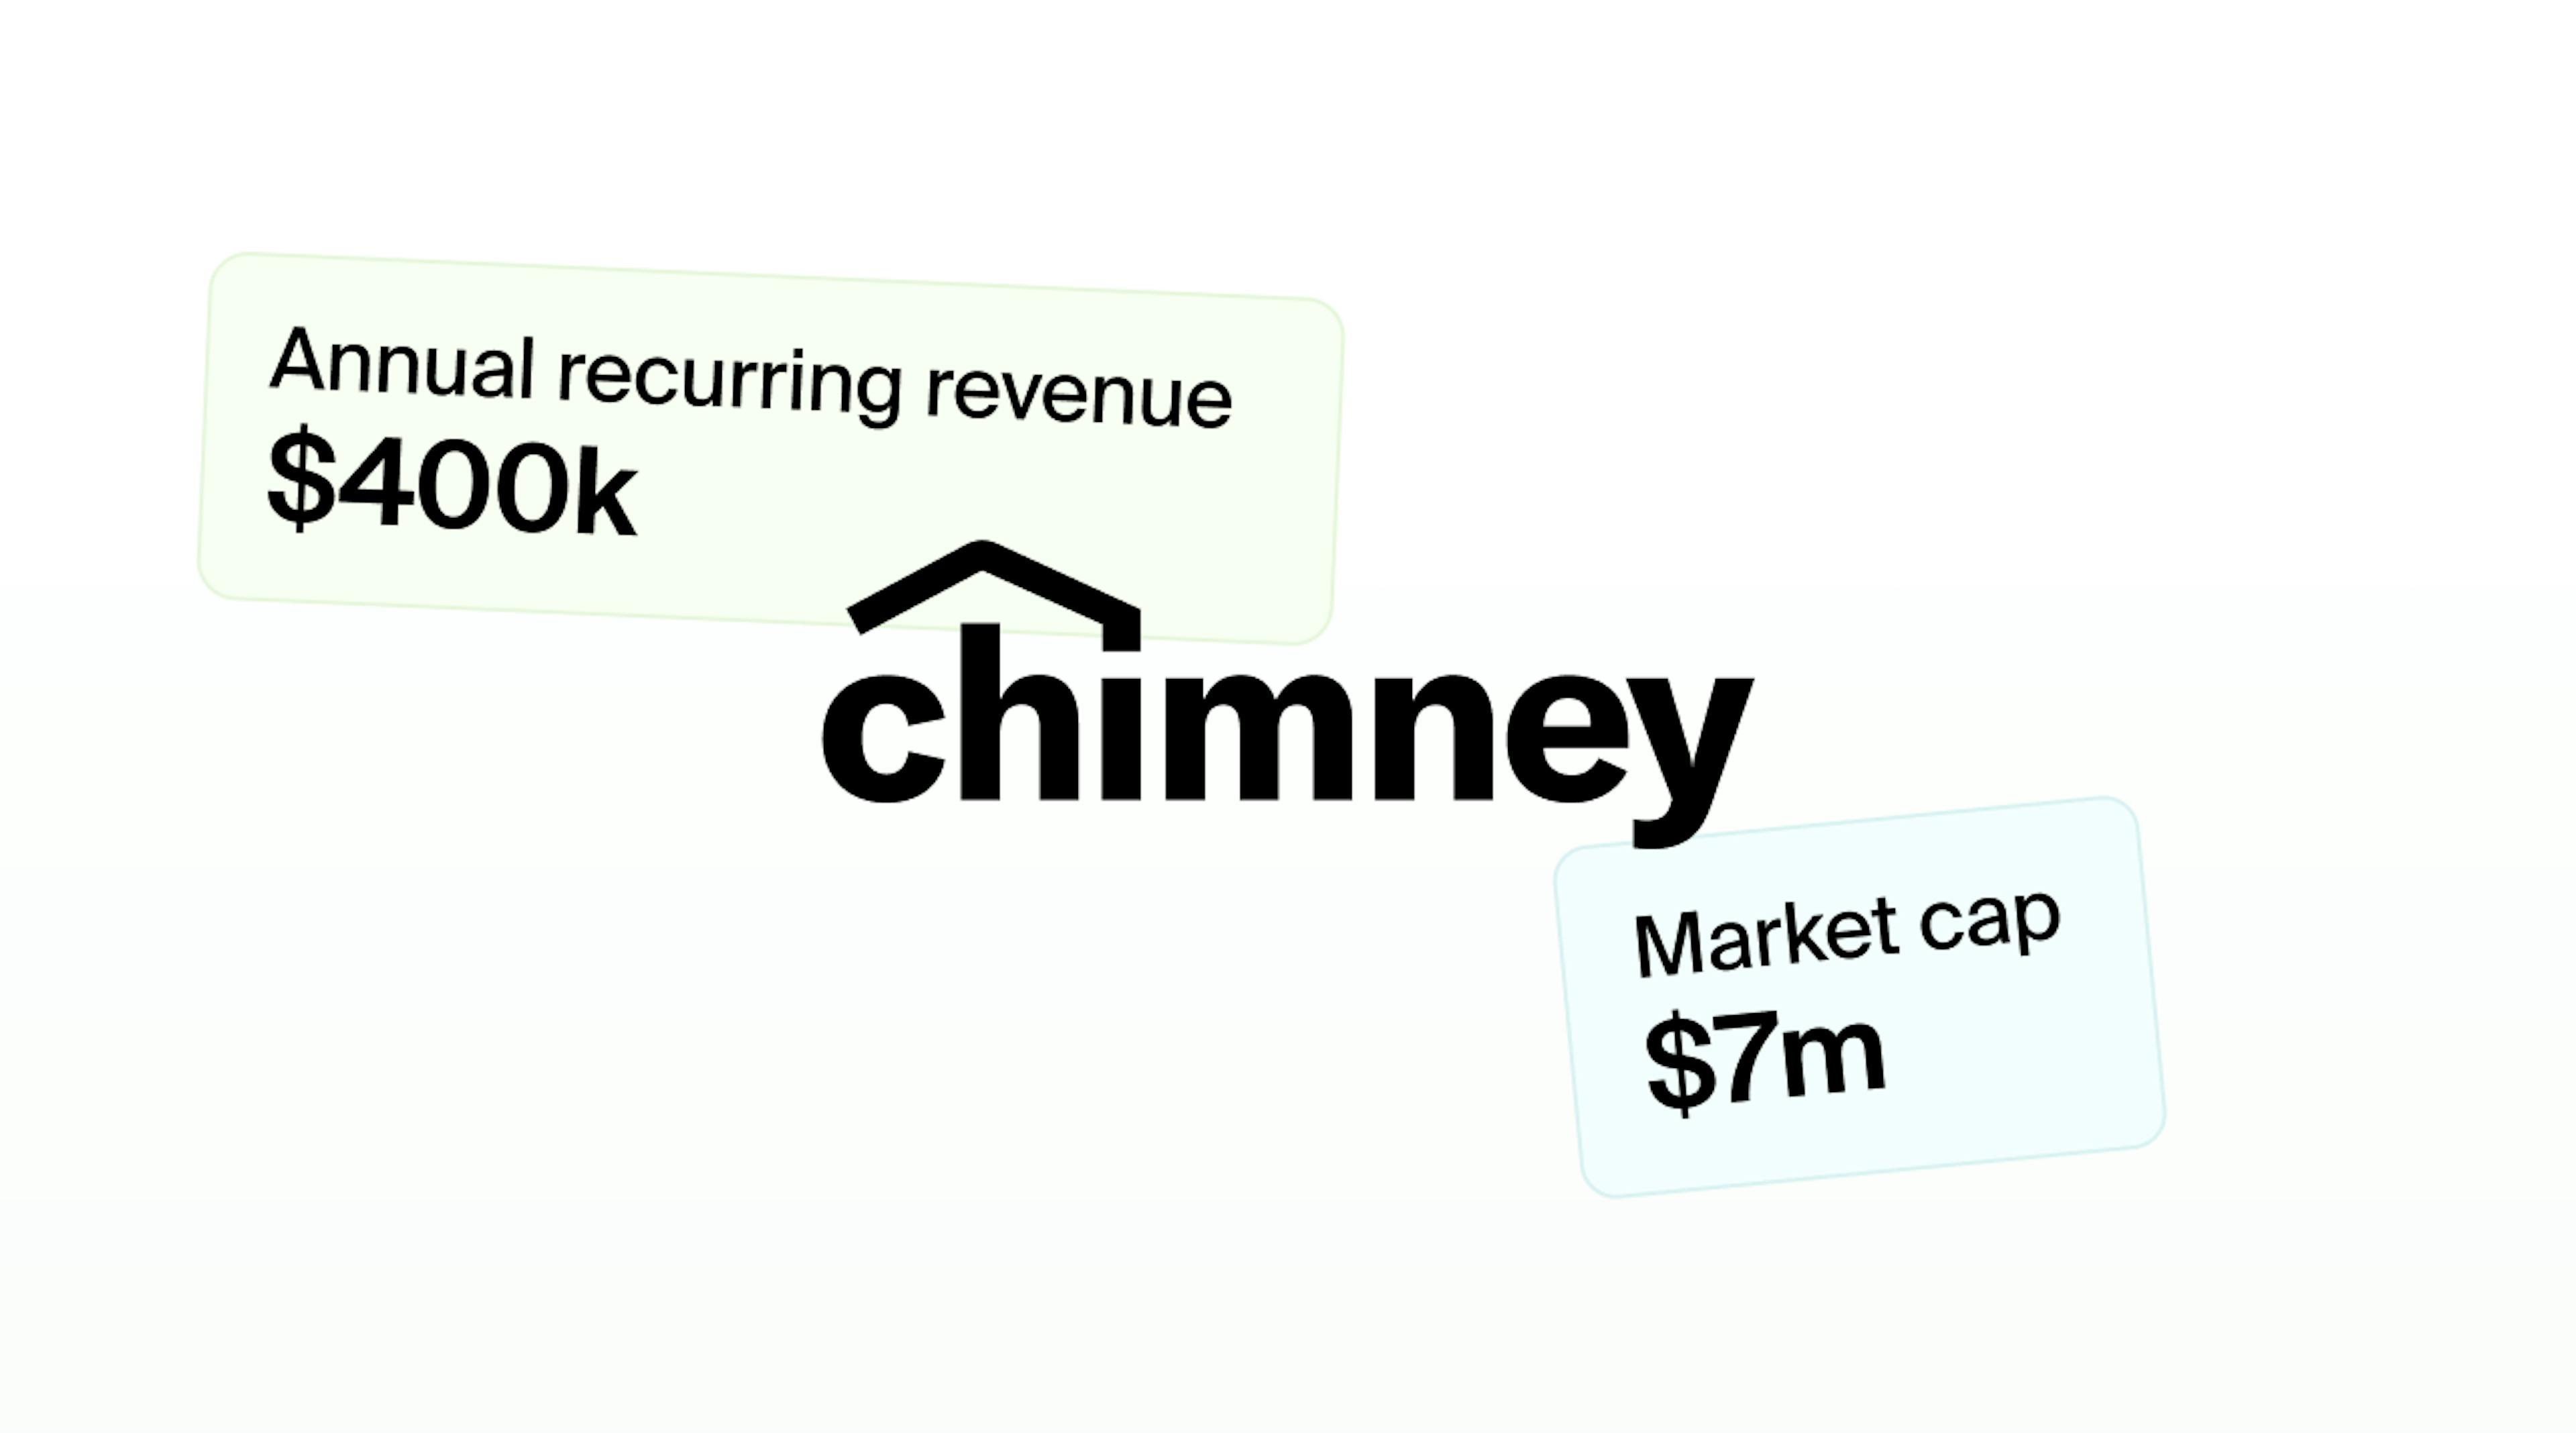 Chimney.io hits $400k ARR, hit $7m cap